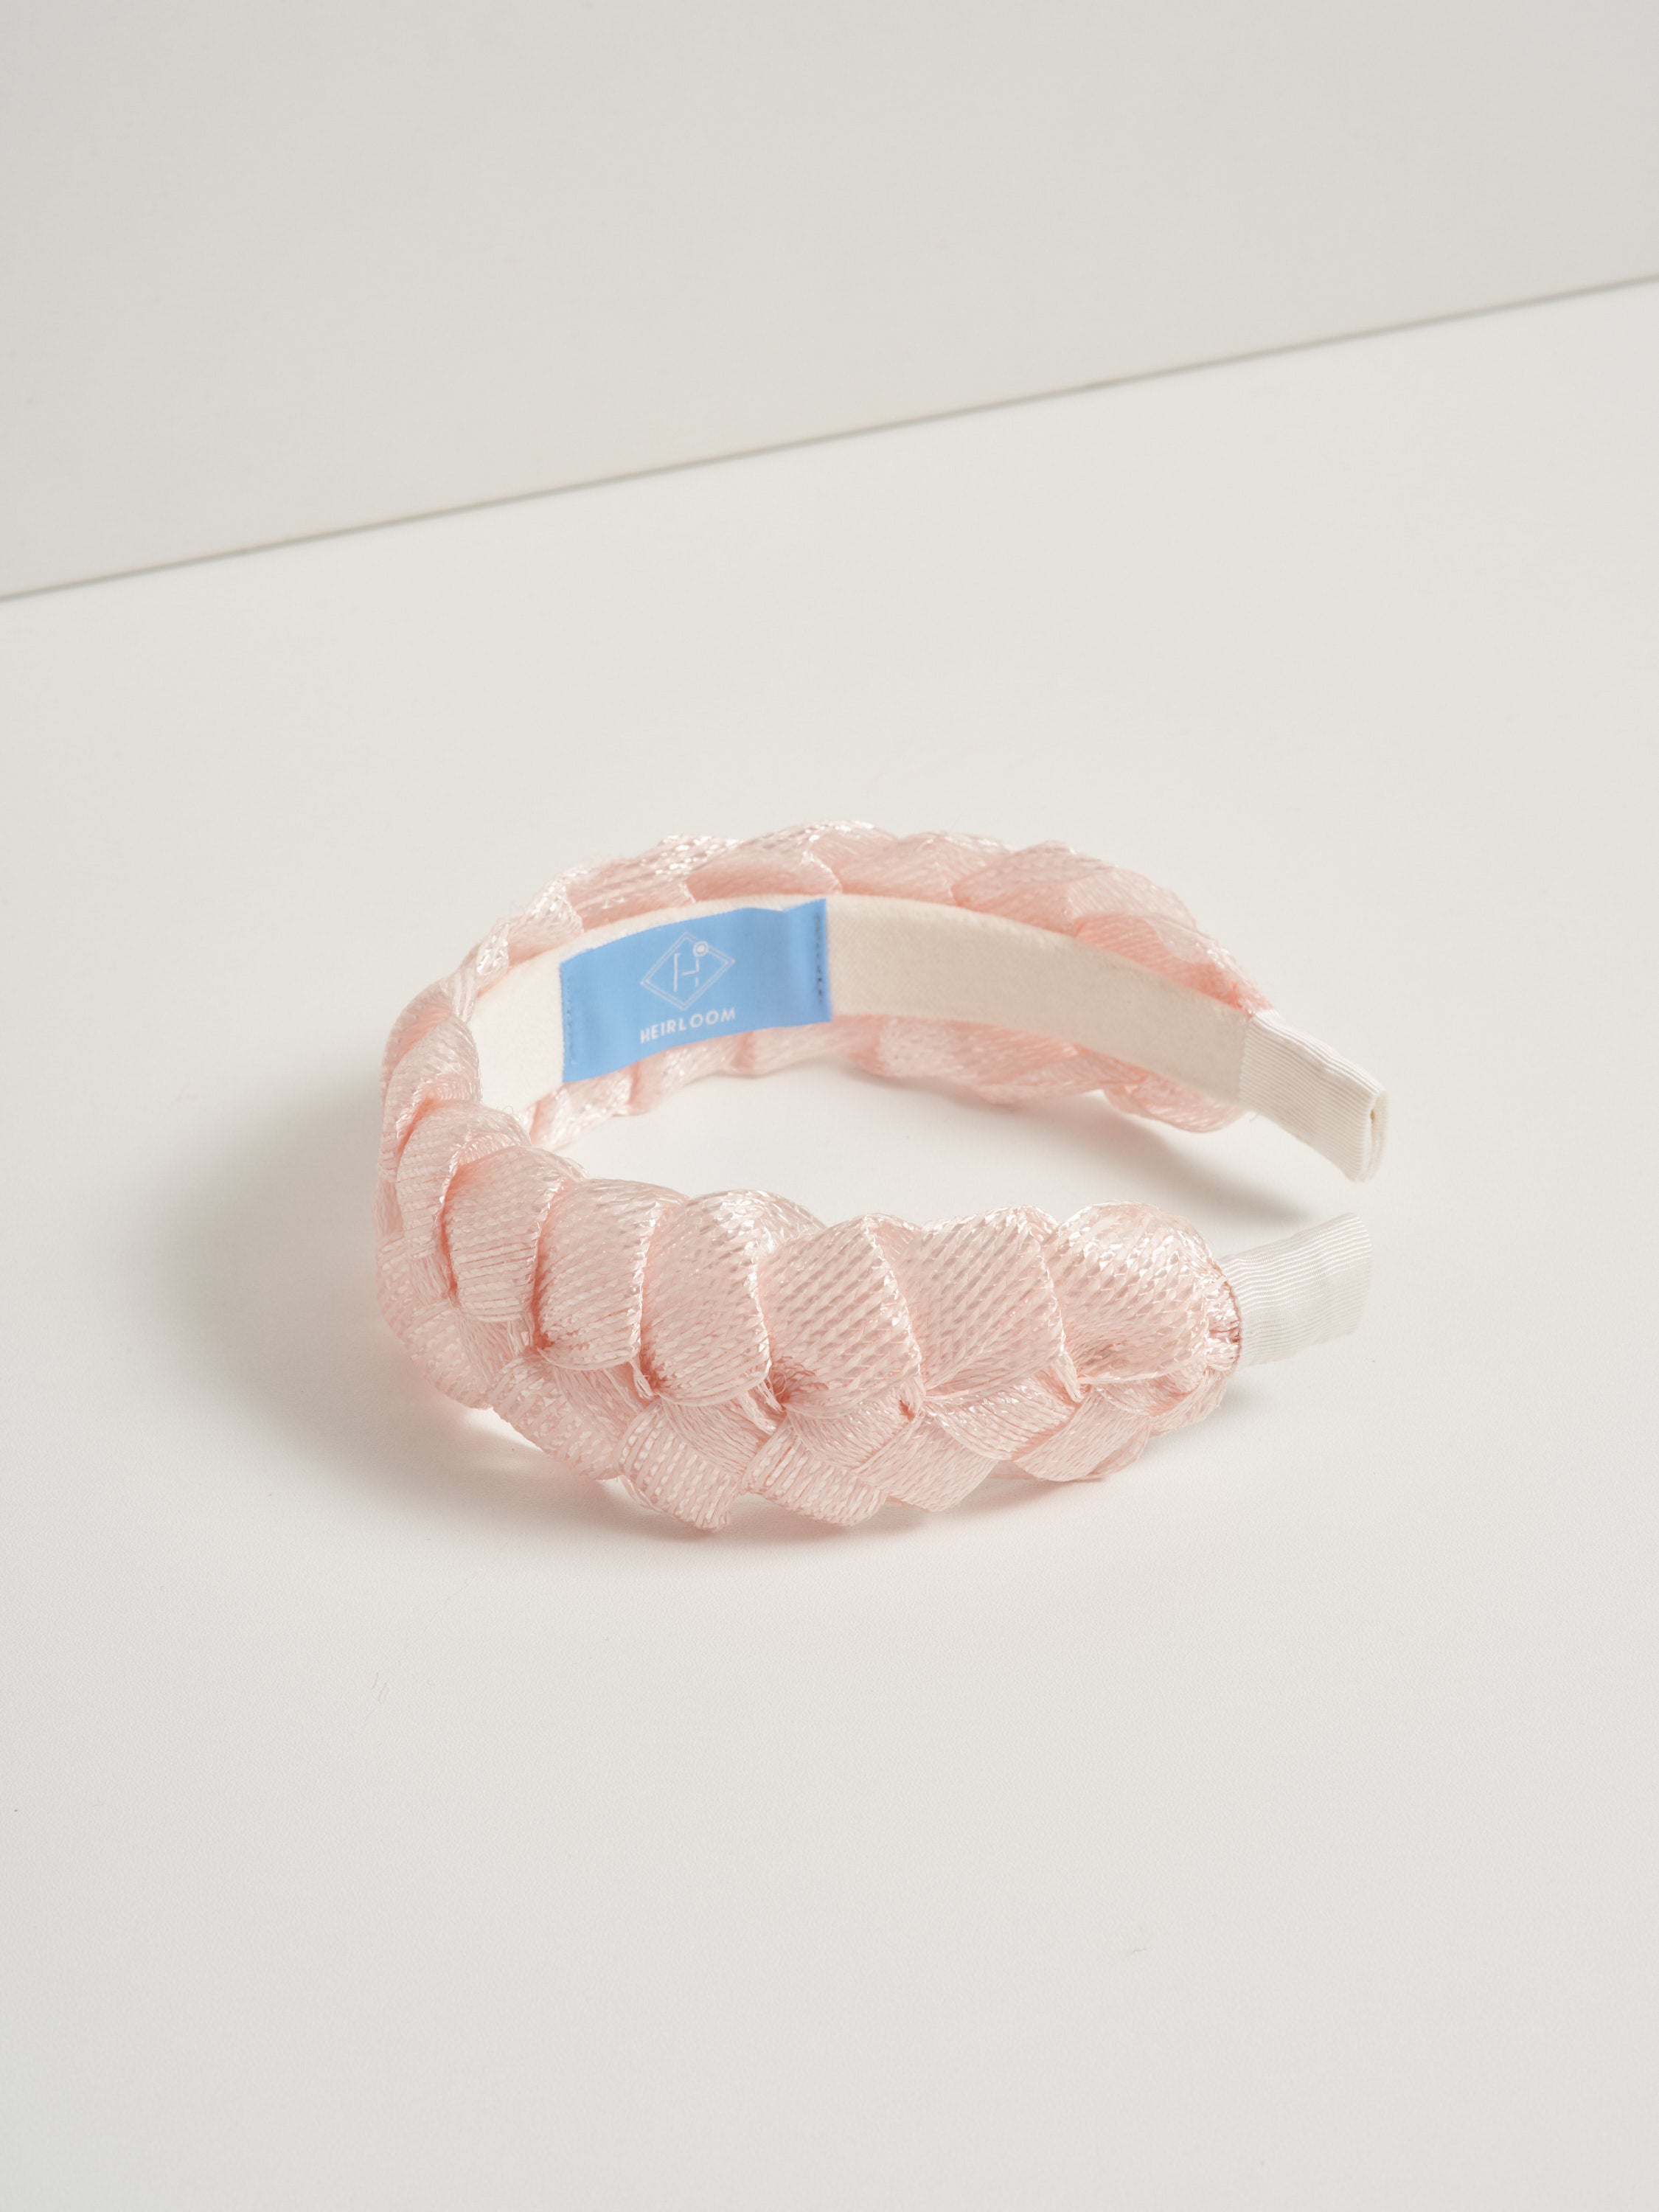 Entwine vintage straw headband - Light pink